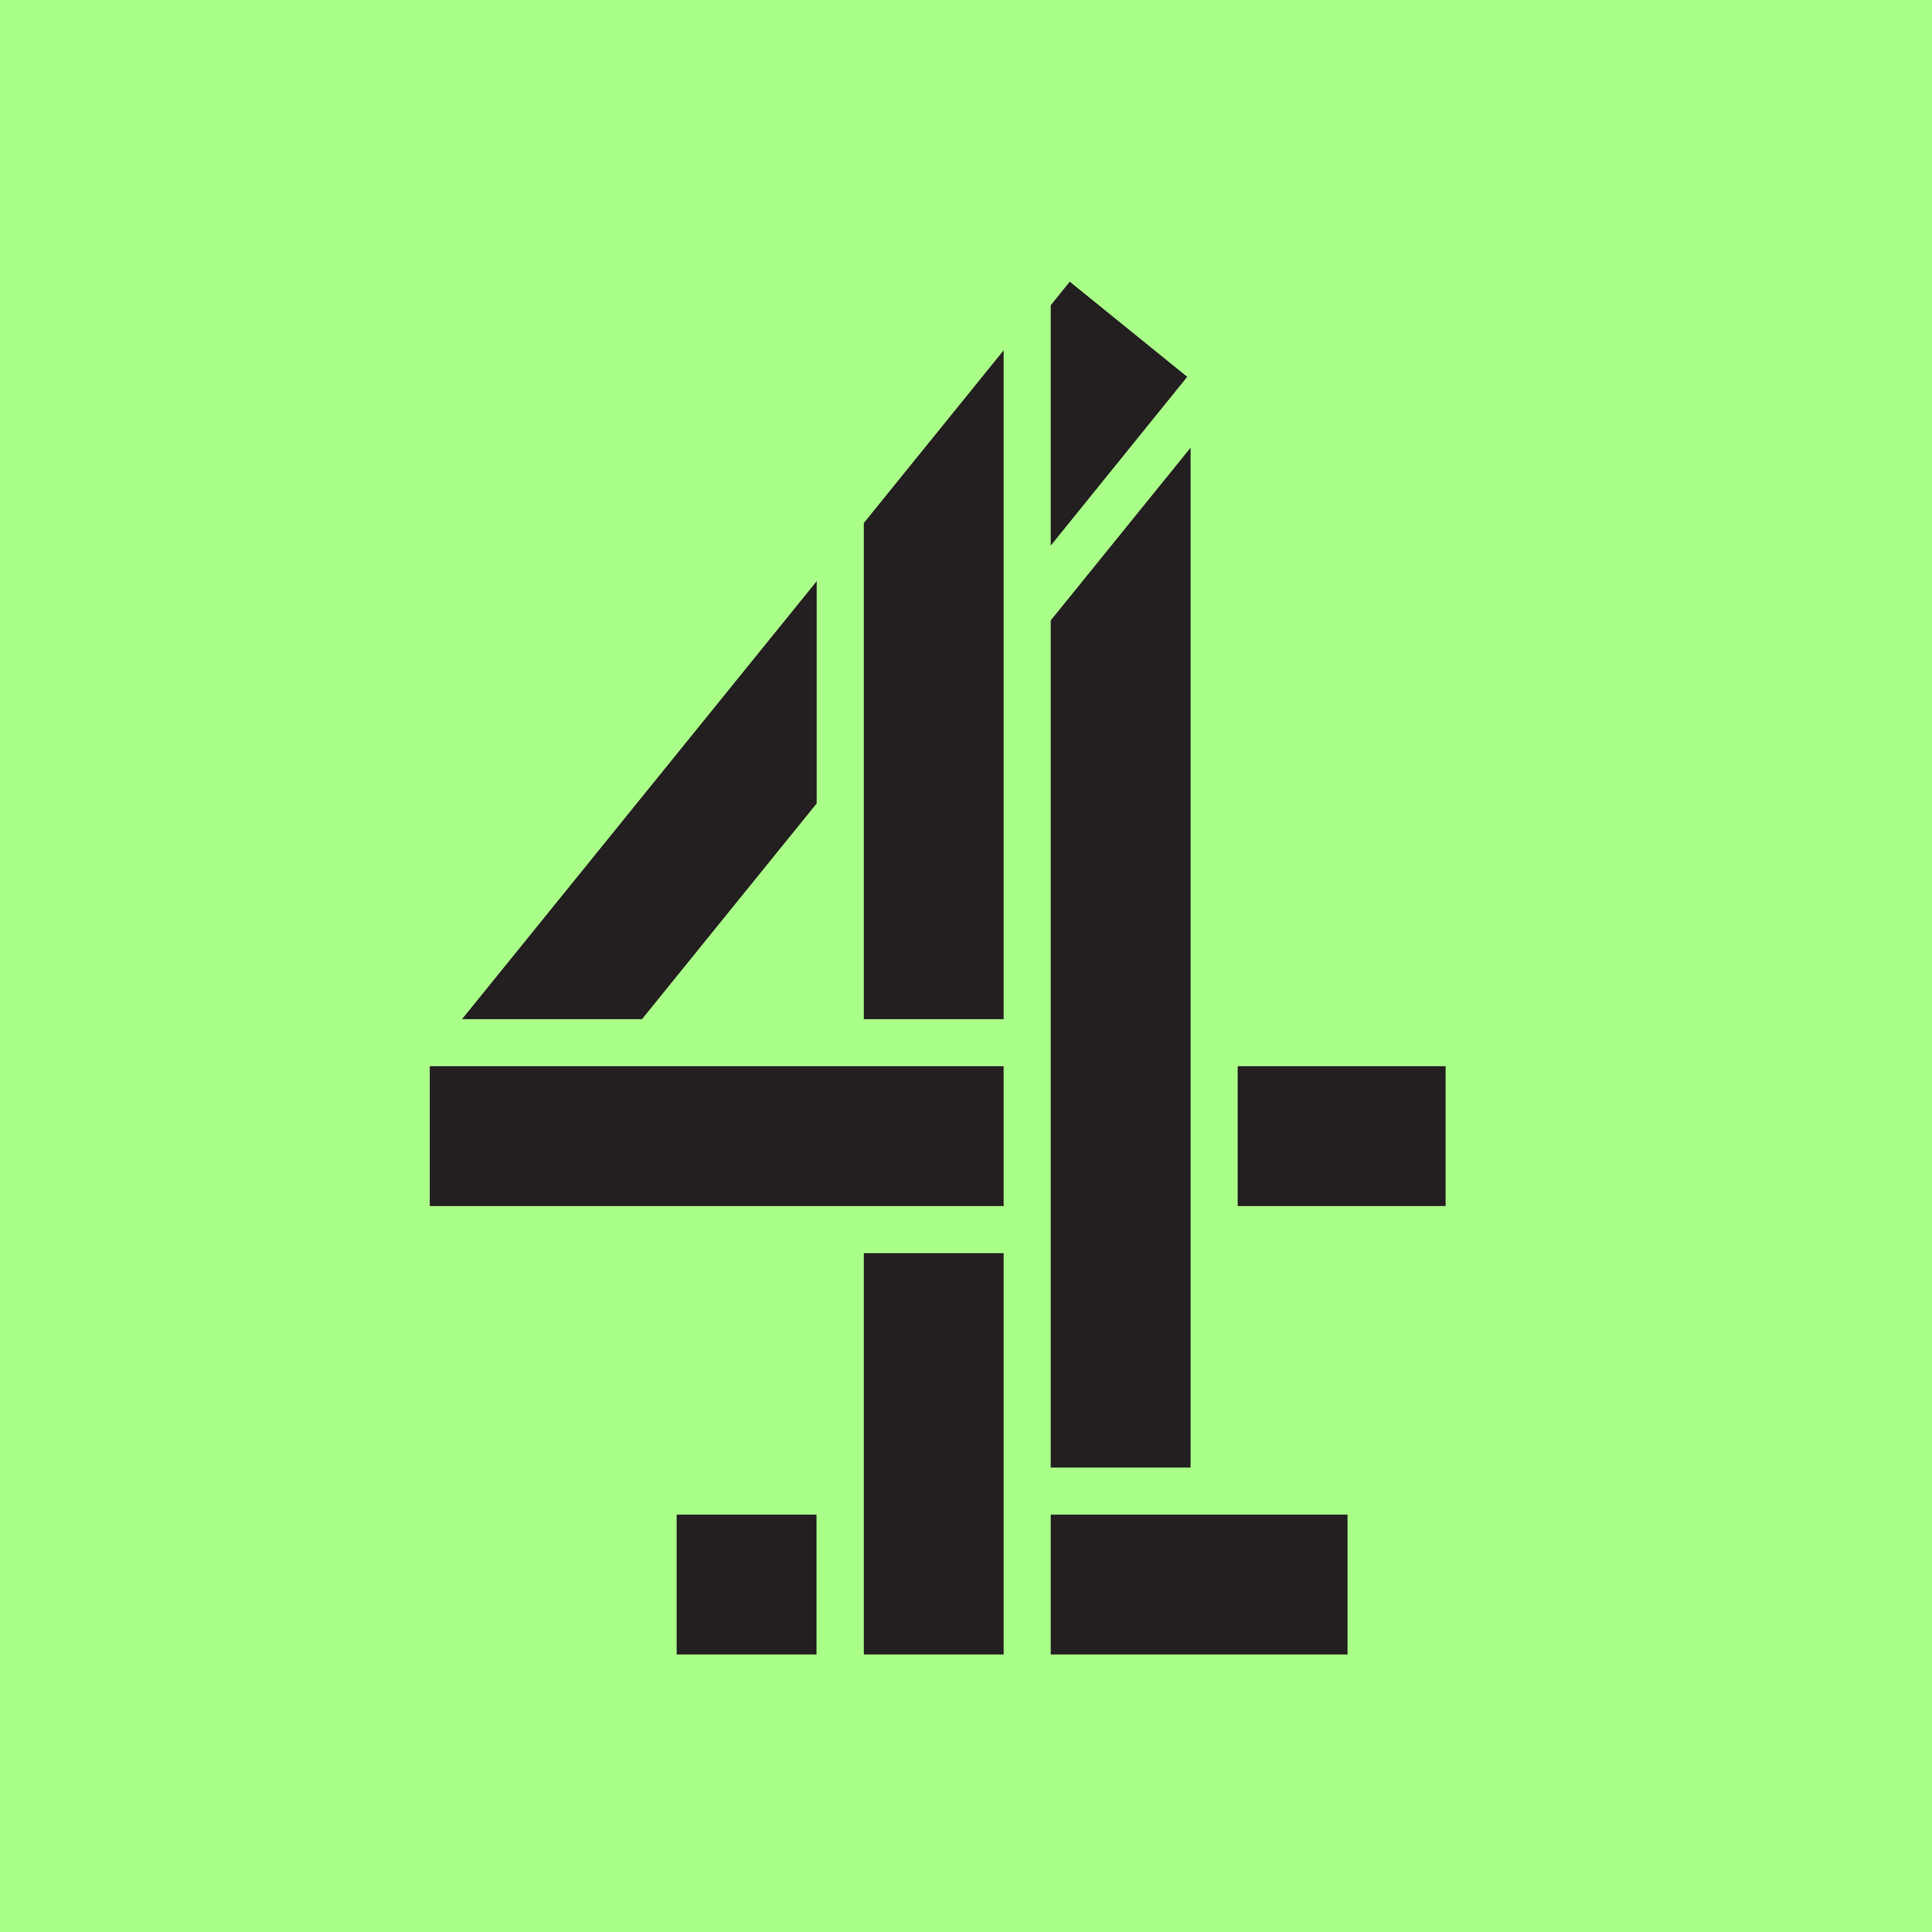 Channel 4 master logo